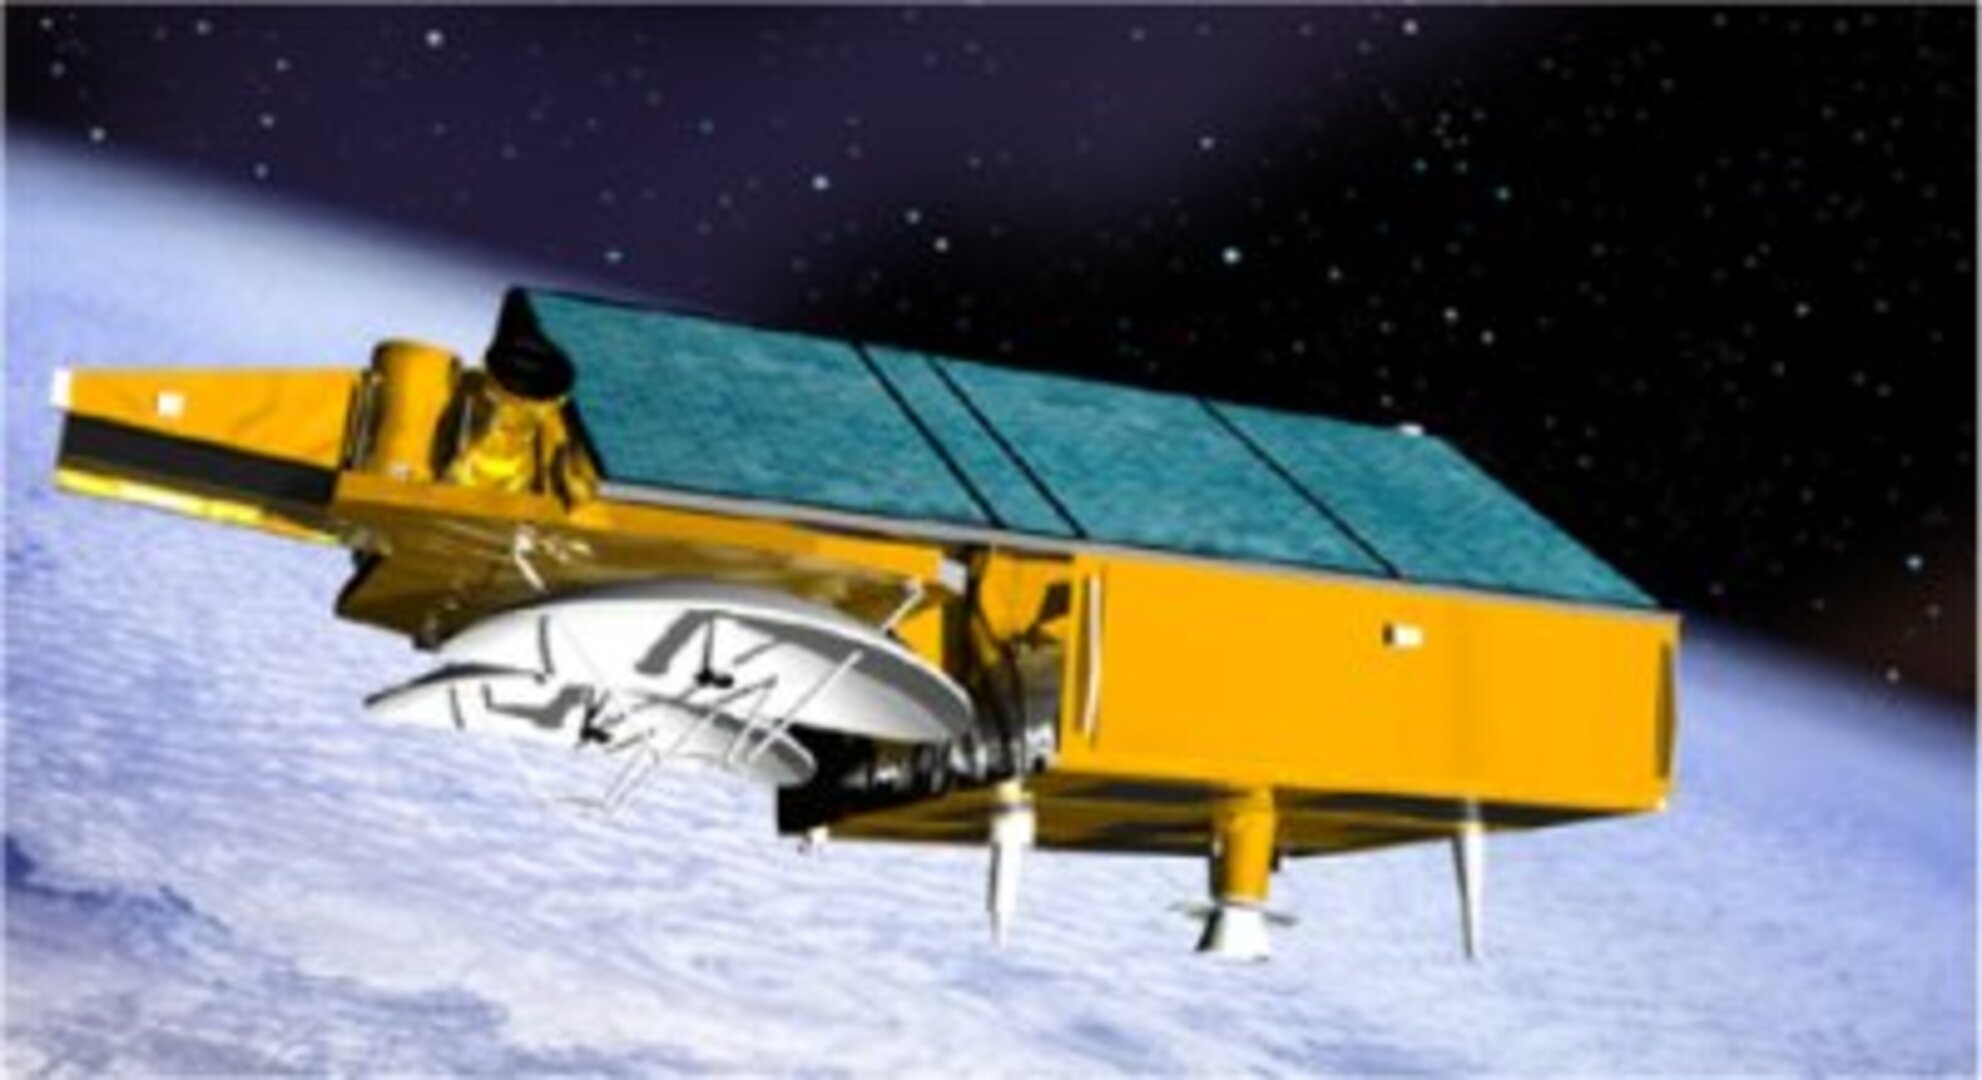 Concept illustration of the CryoSat satellite design